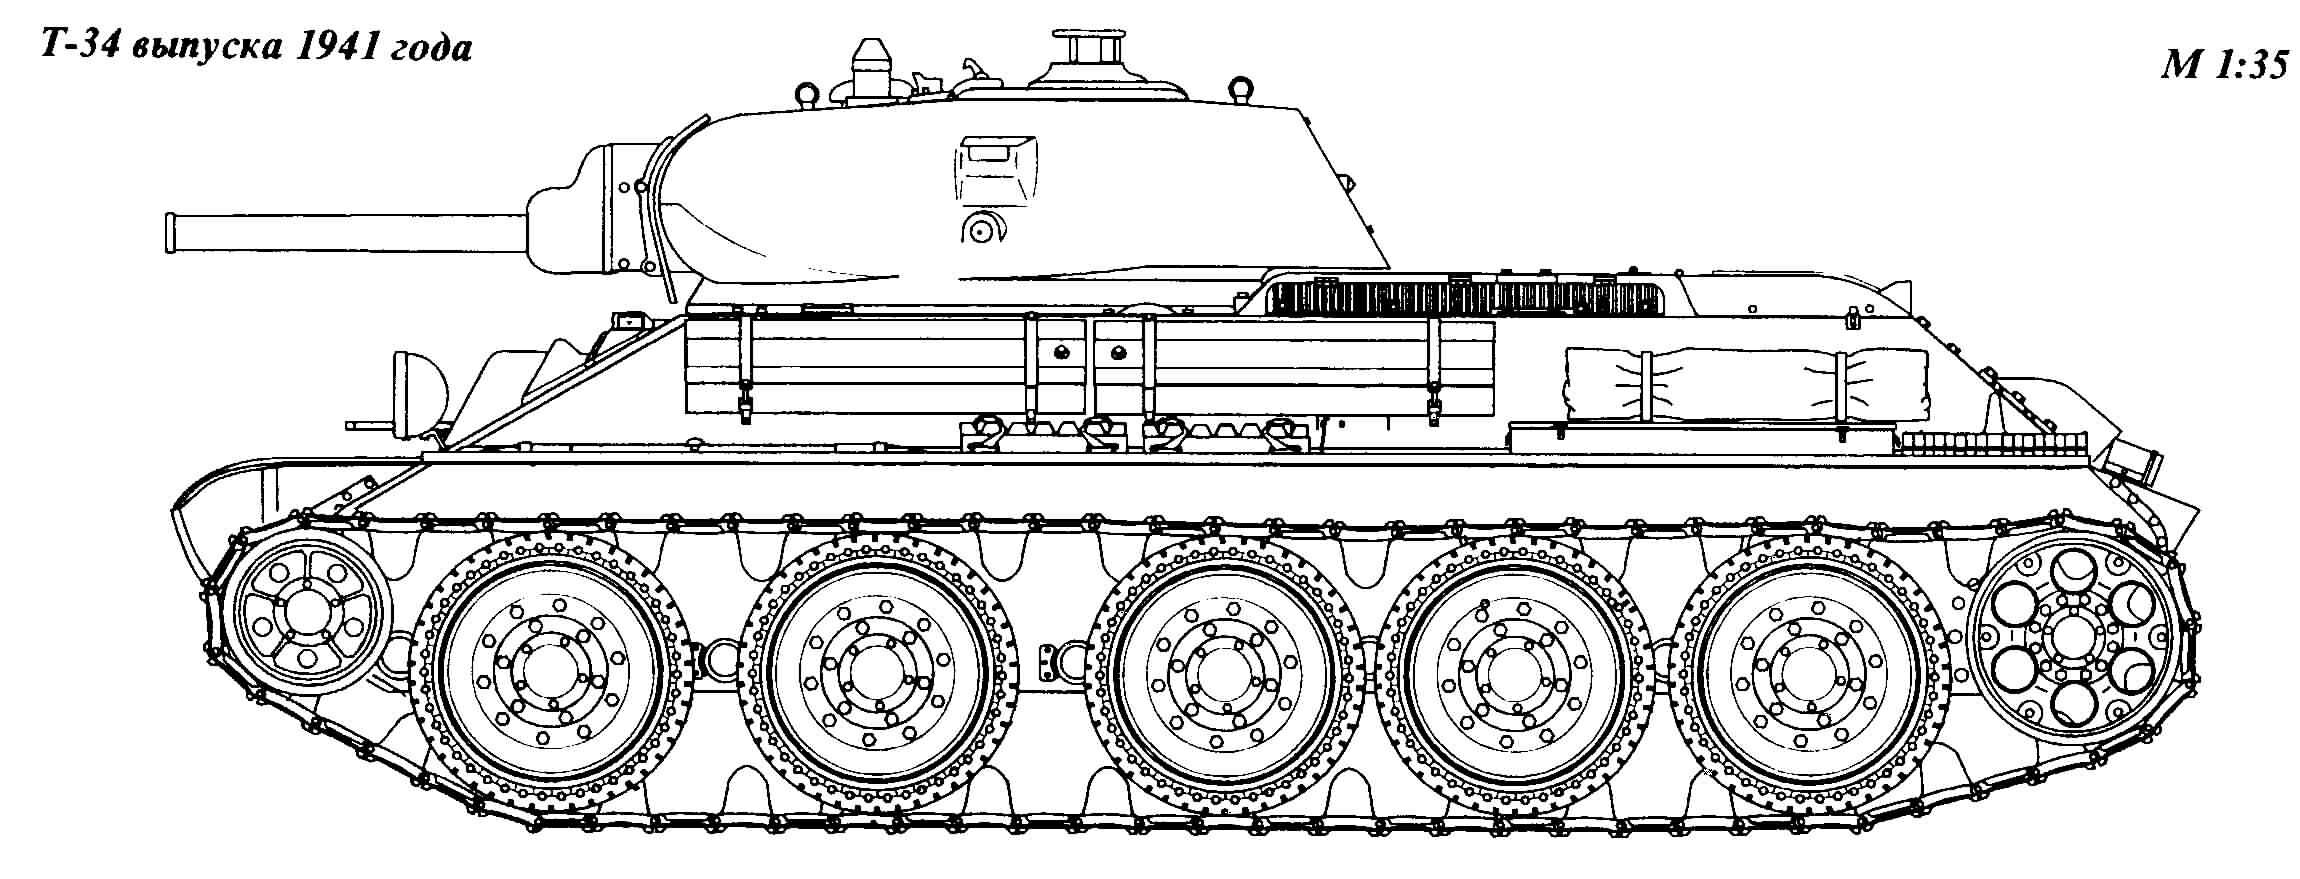 Т 34 средний танк #1